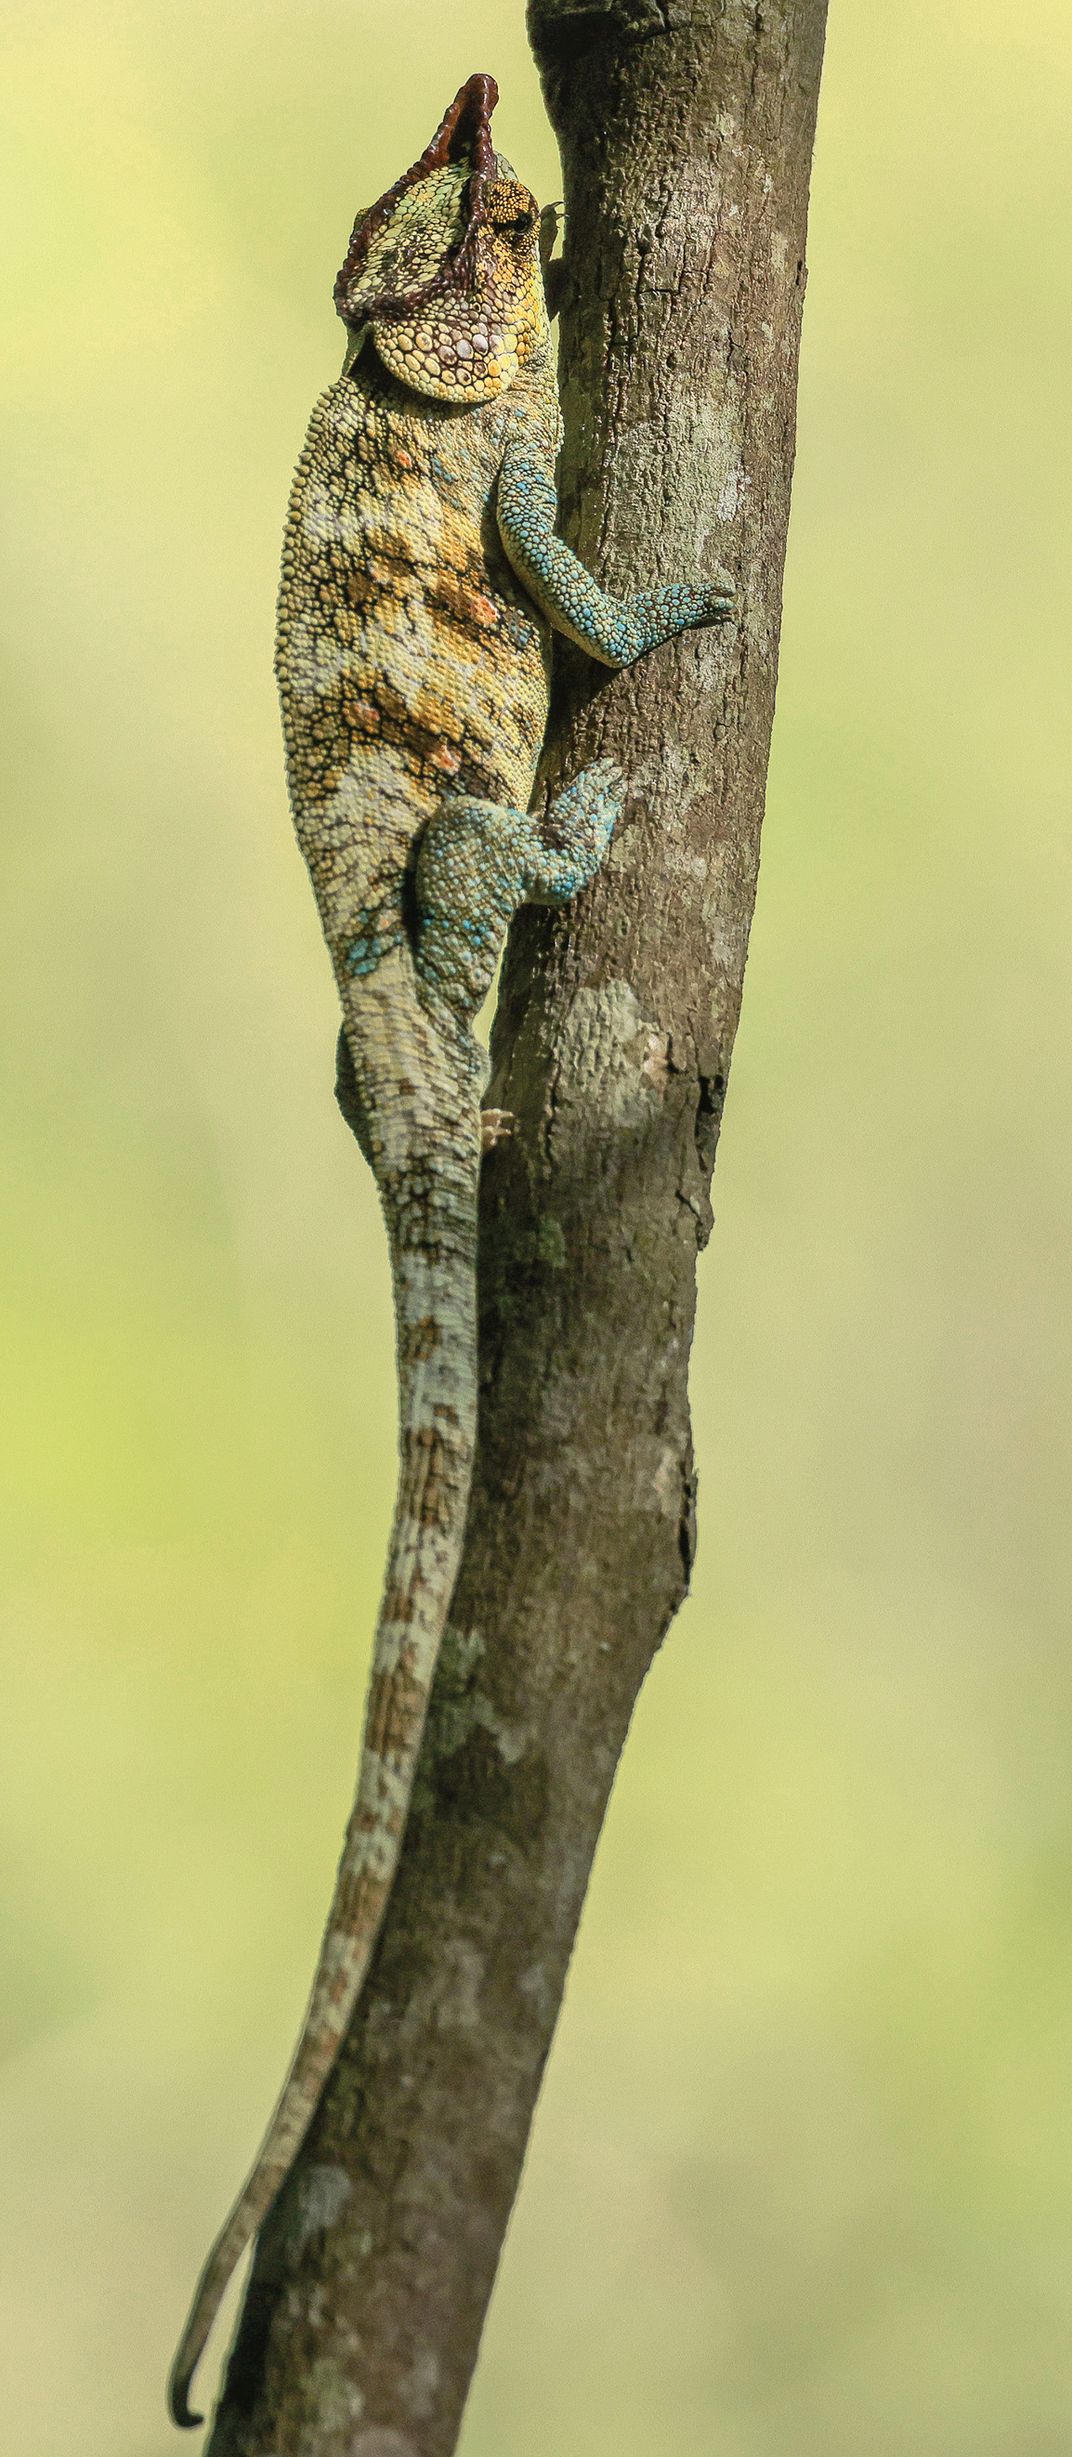 Malagasy giant chameleon